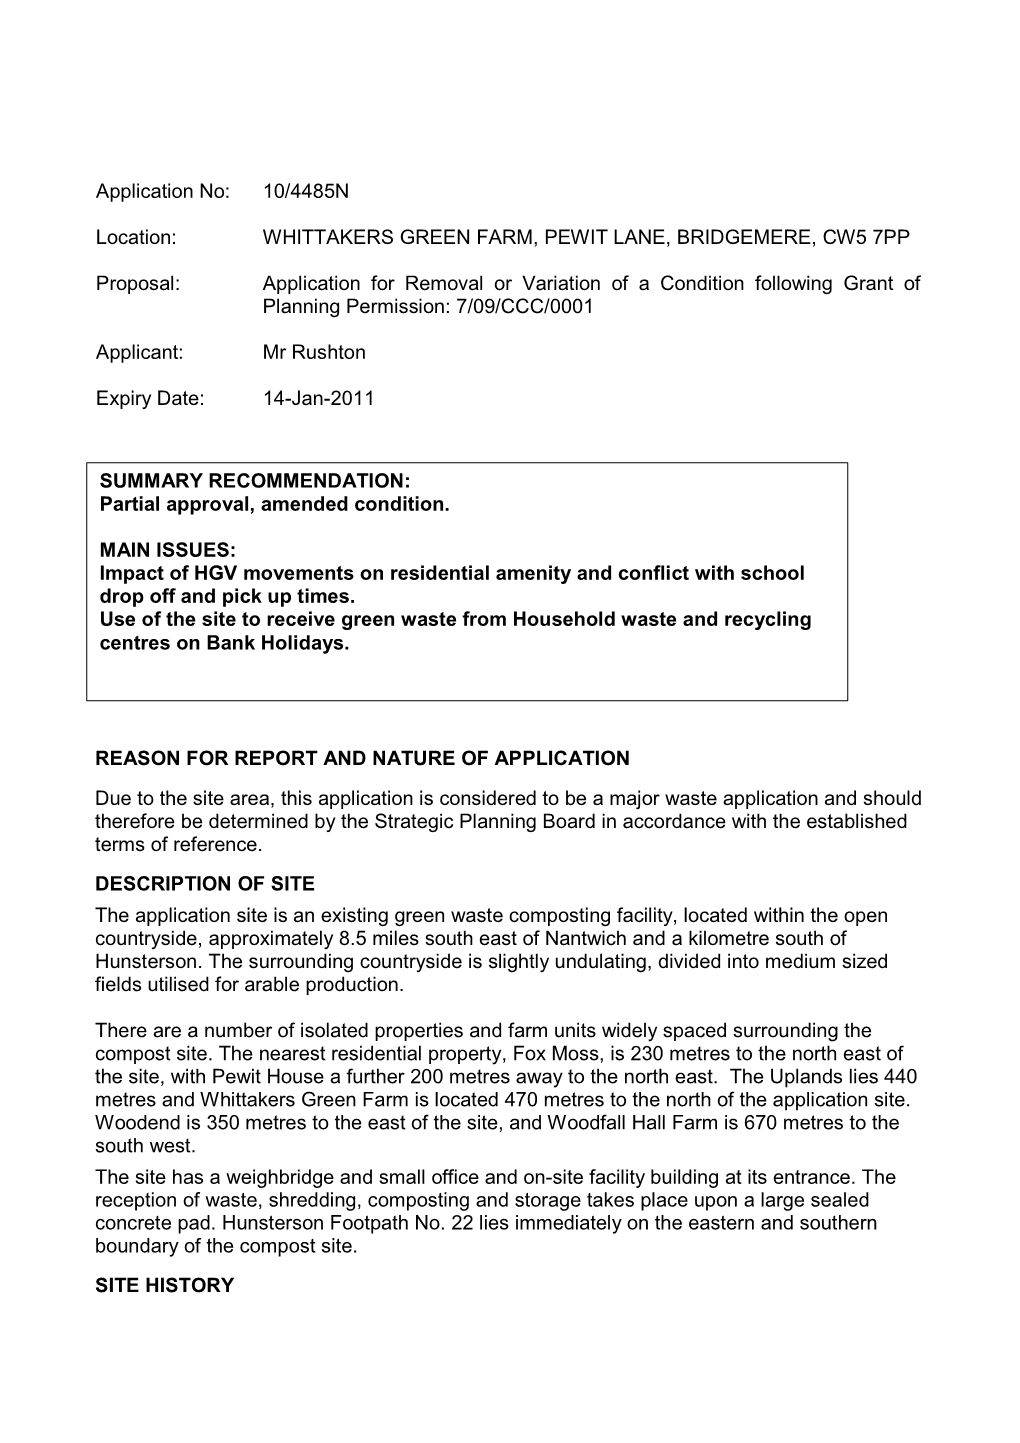 Application No: 10/4485N Location: WHITTAKERS GREEN FARM, PEWIT LANE, BRIDGEMERE, CW5 7PP Proposal